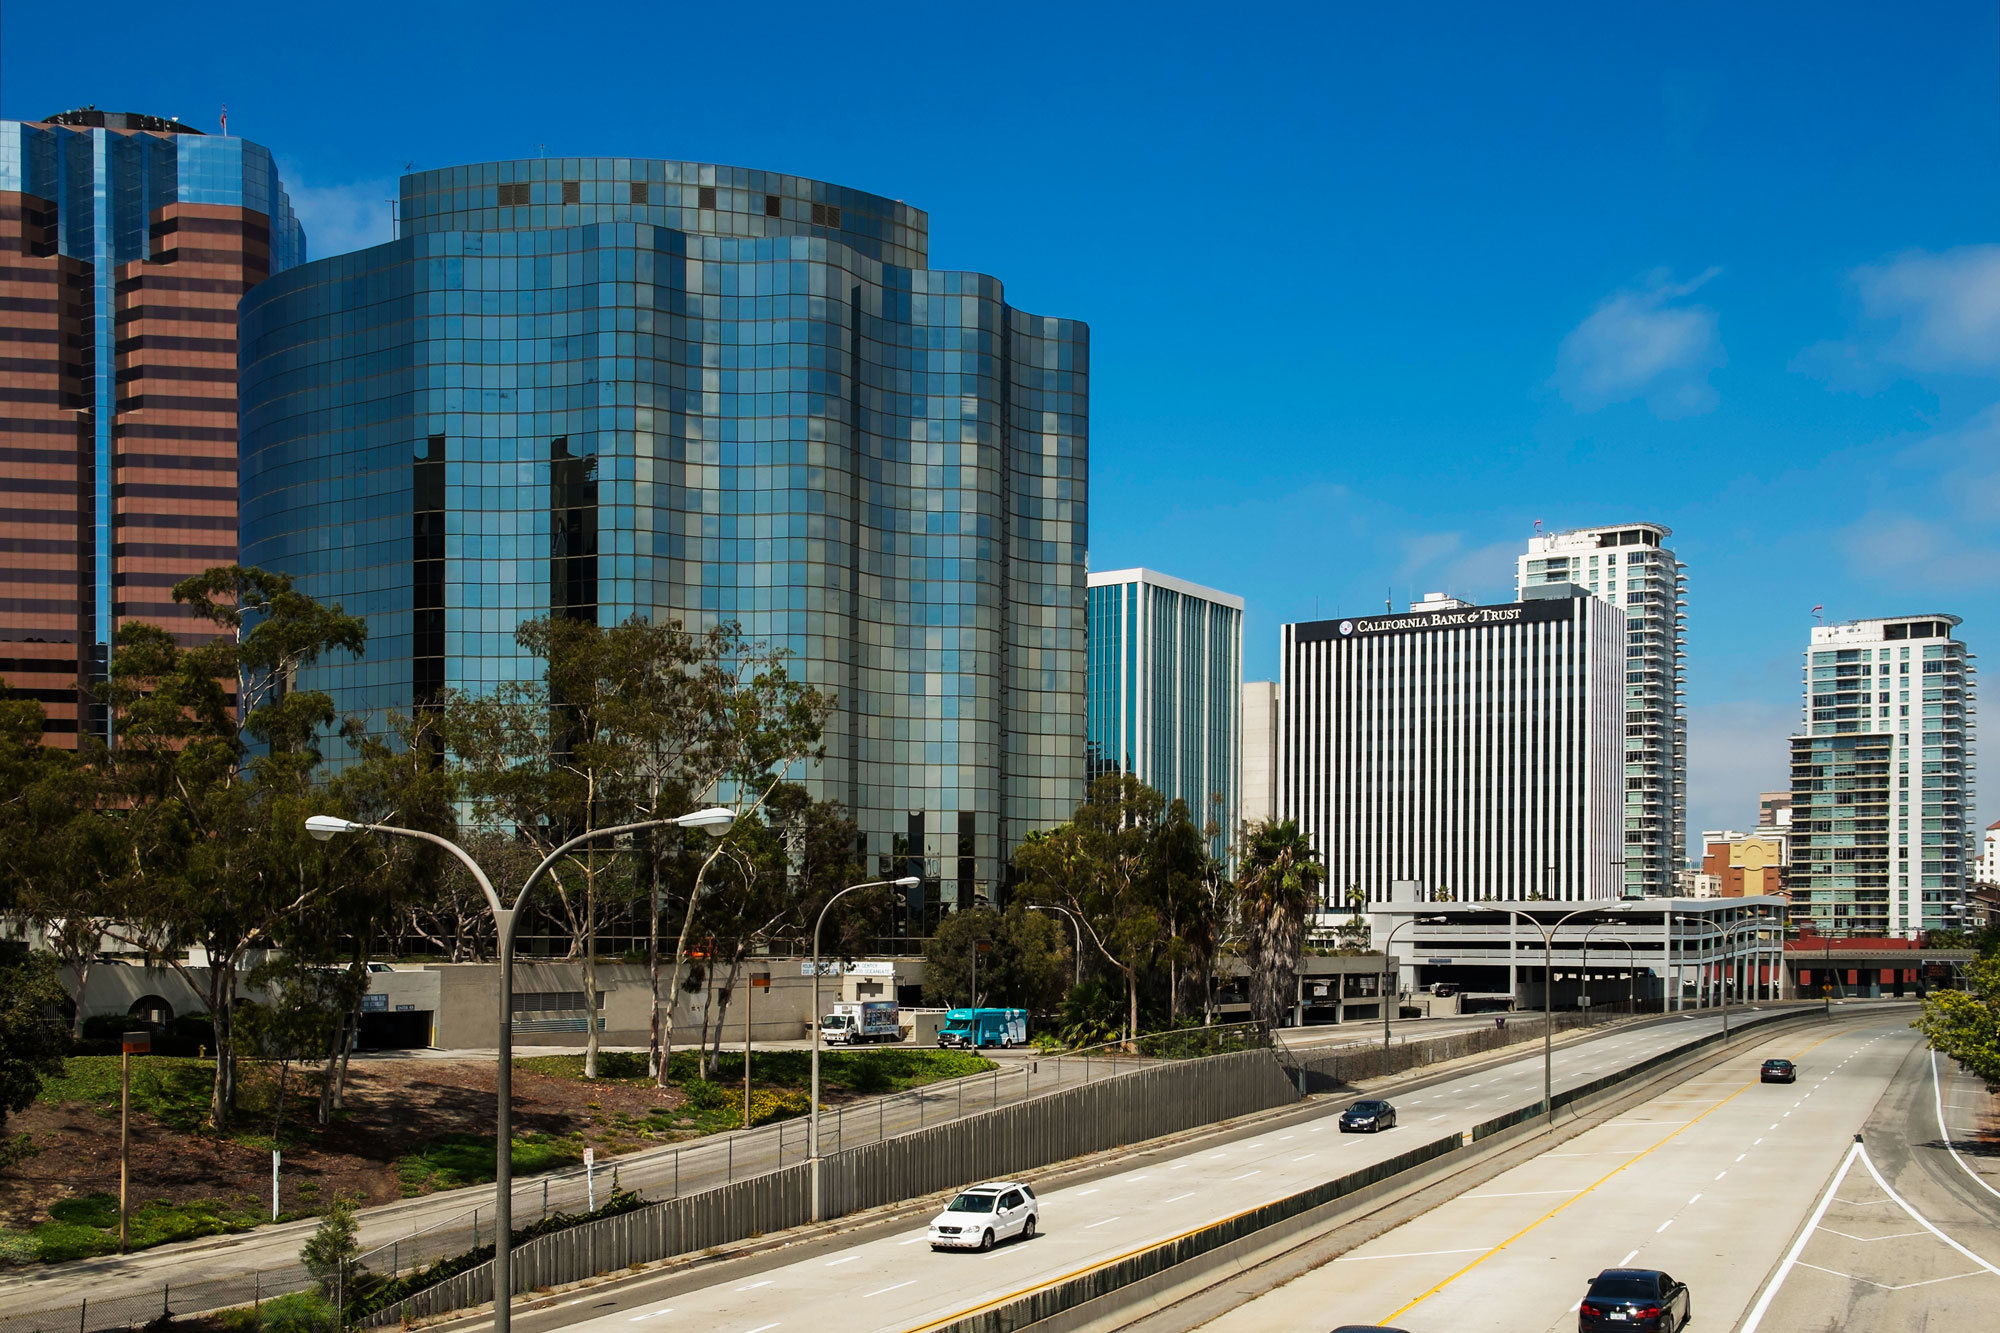 Long Beach skyline from freeway